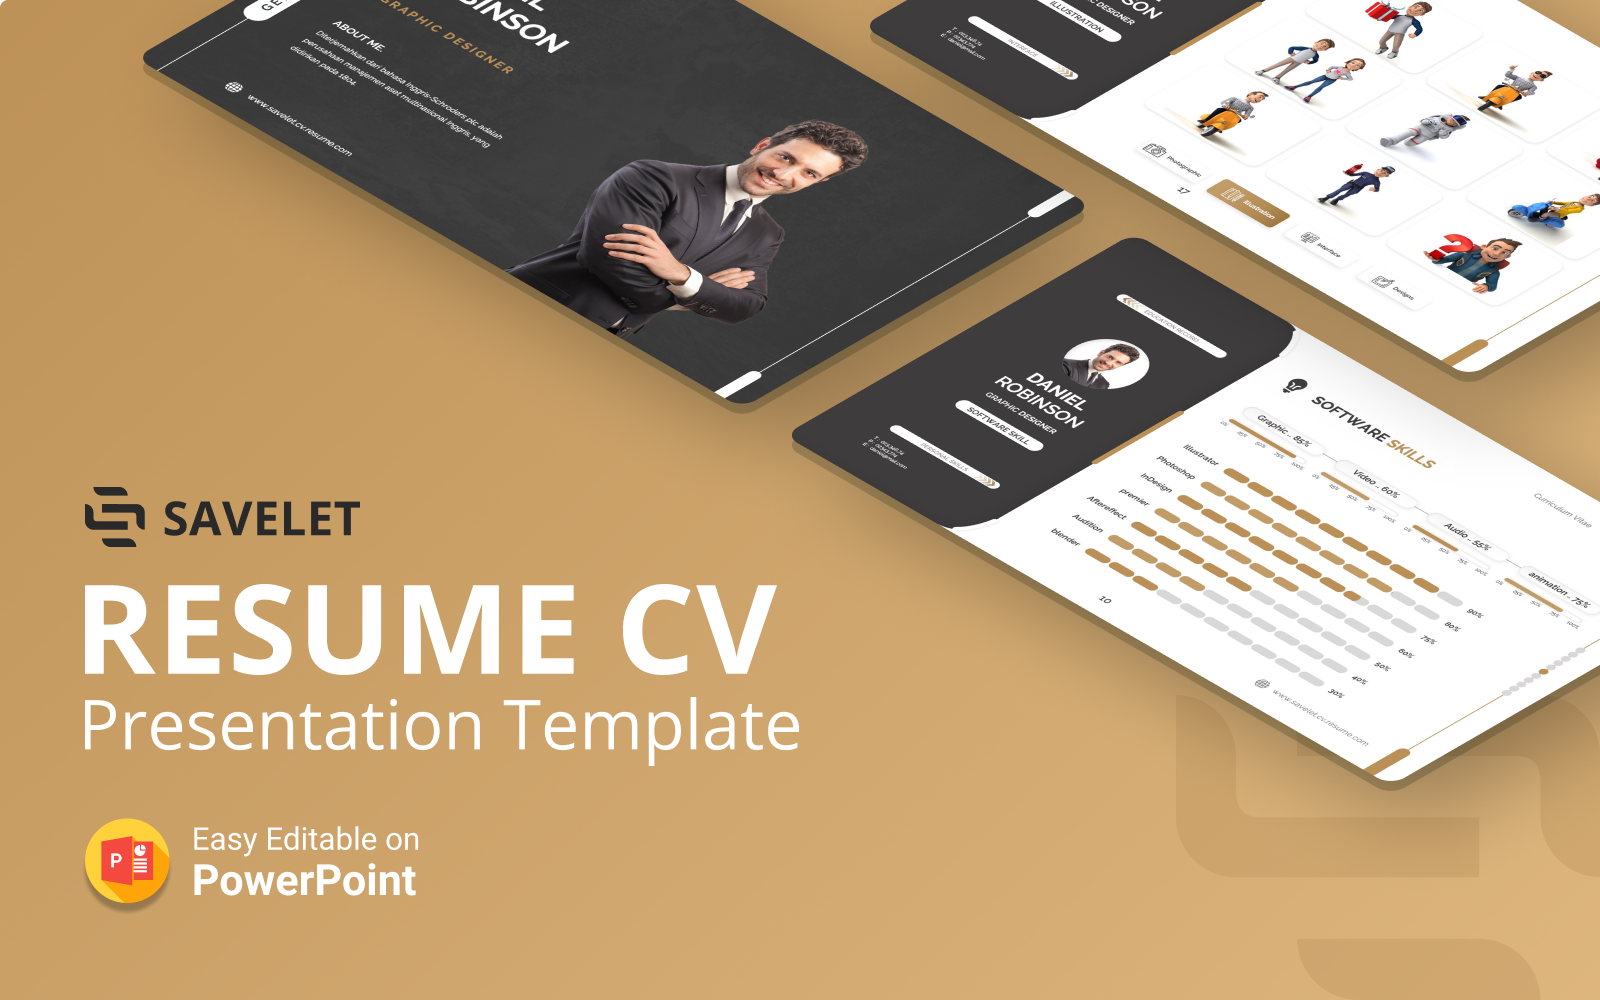 Savelet – CV Resume PowerPoint Presentation Template